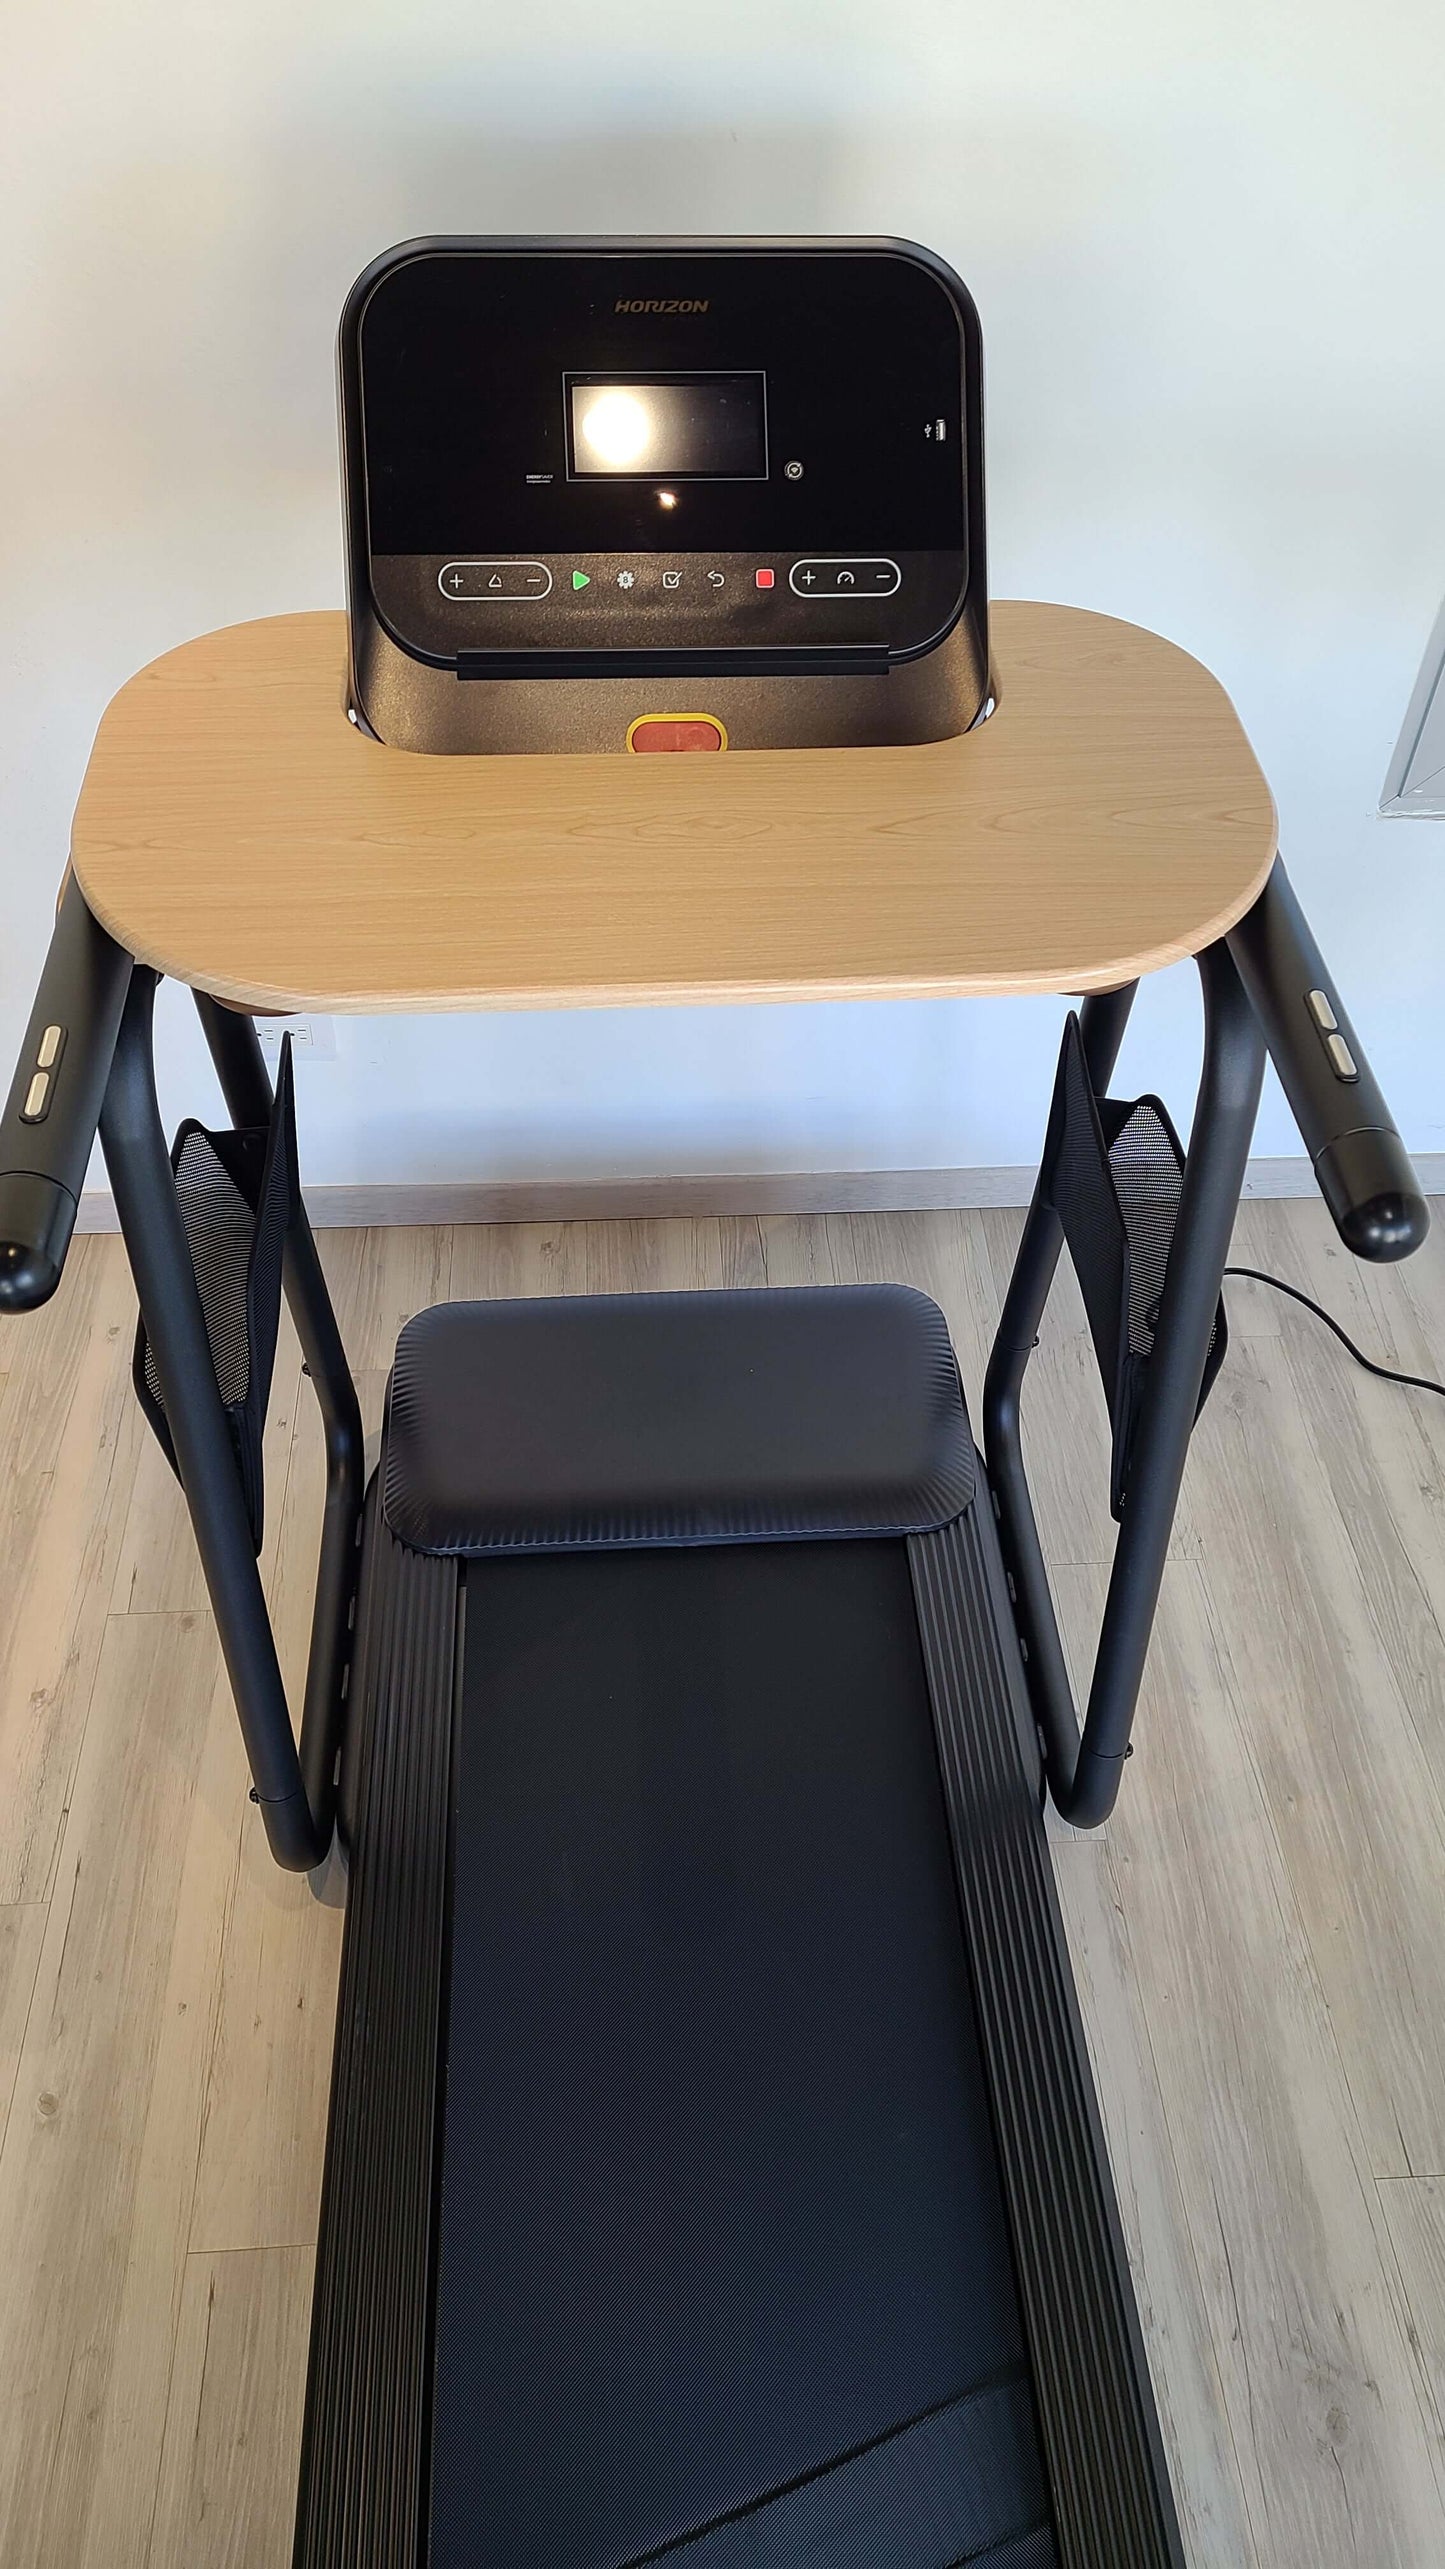 HORIZON Citta Folding Treadmill